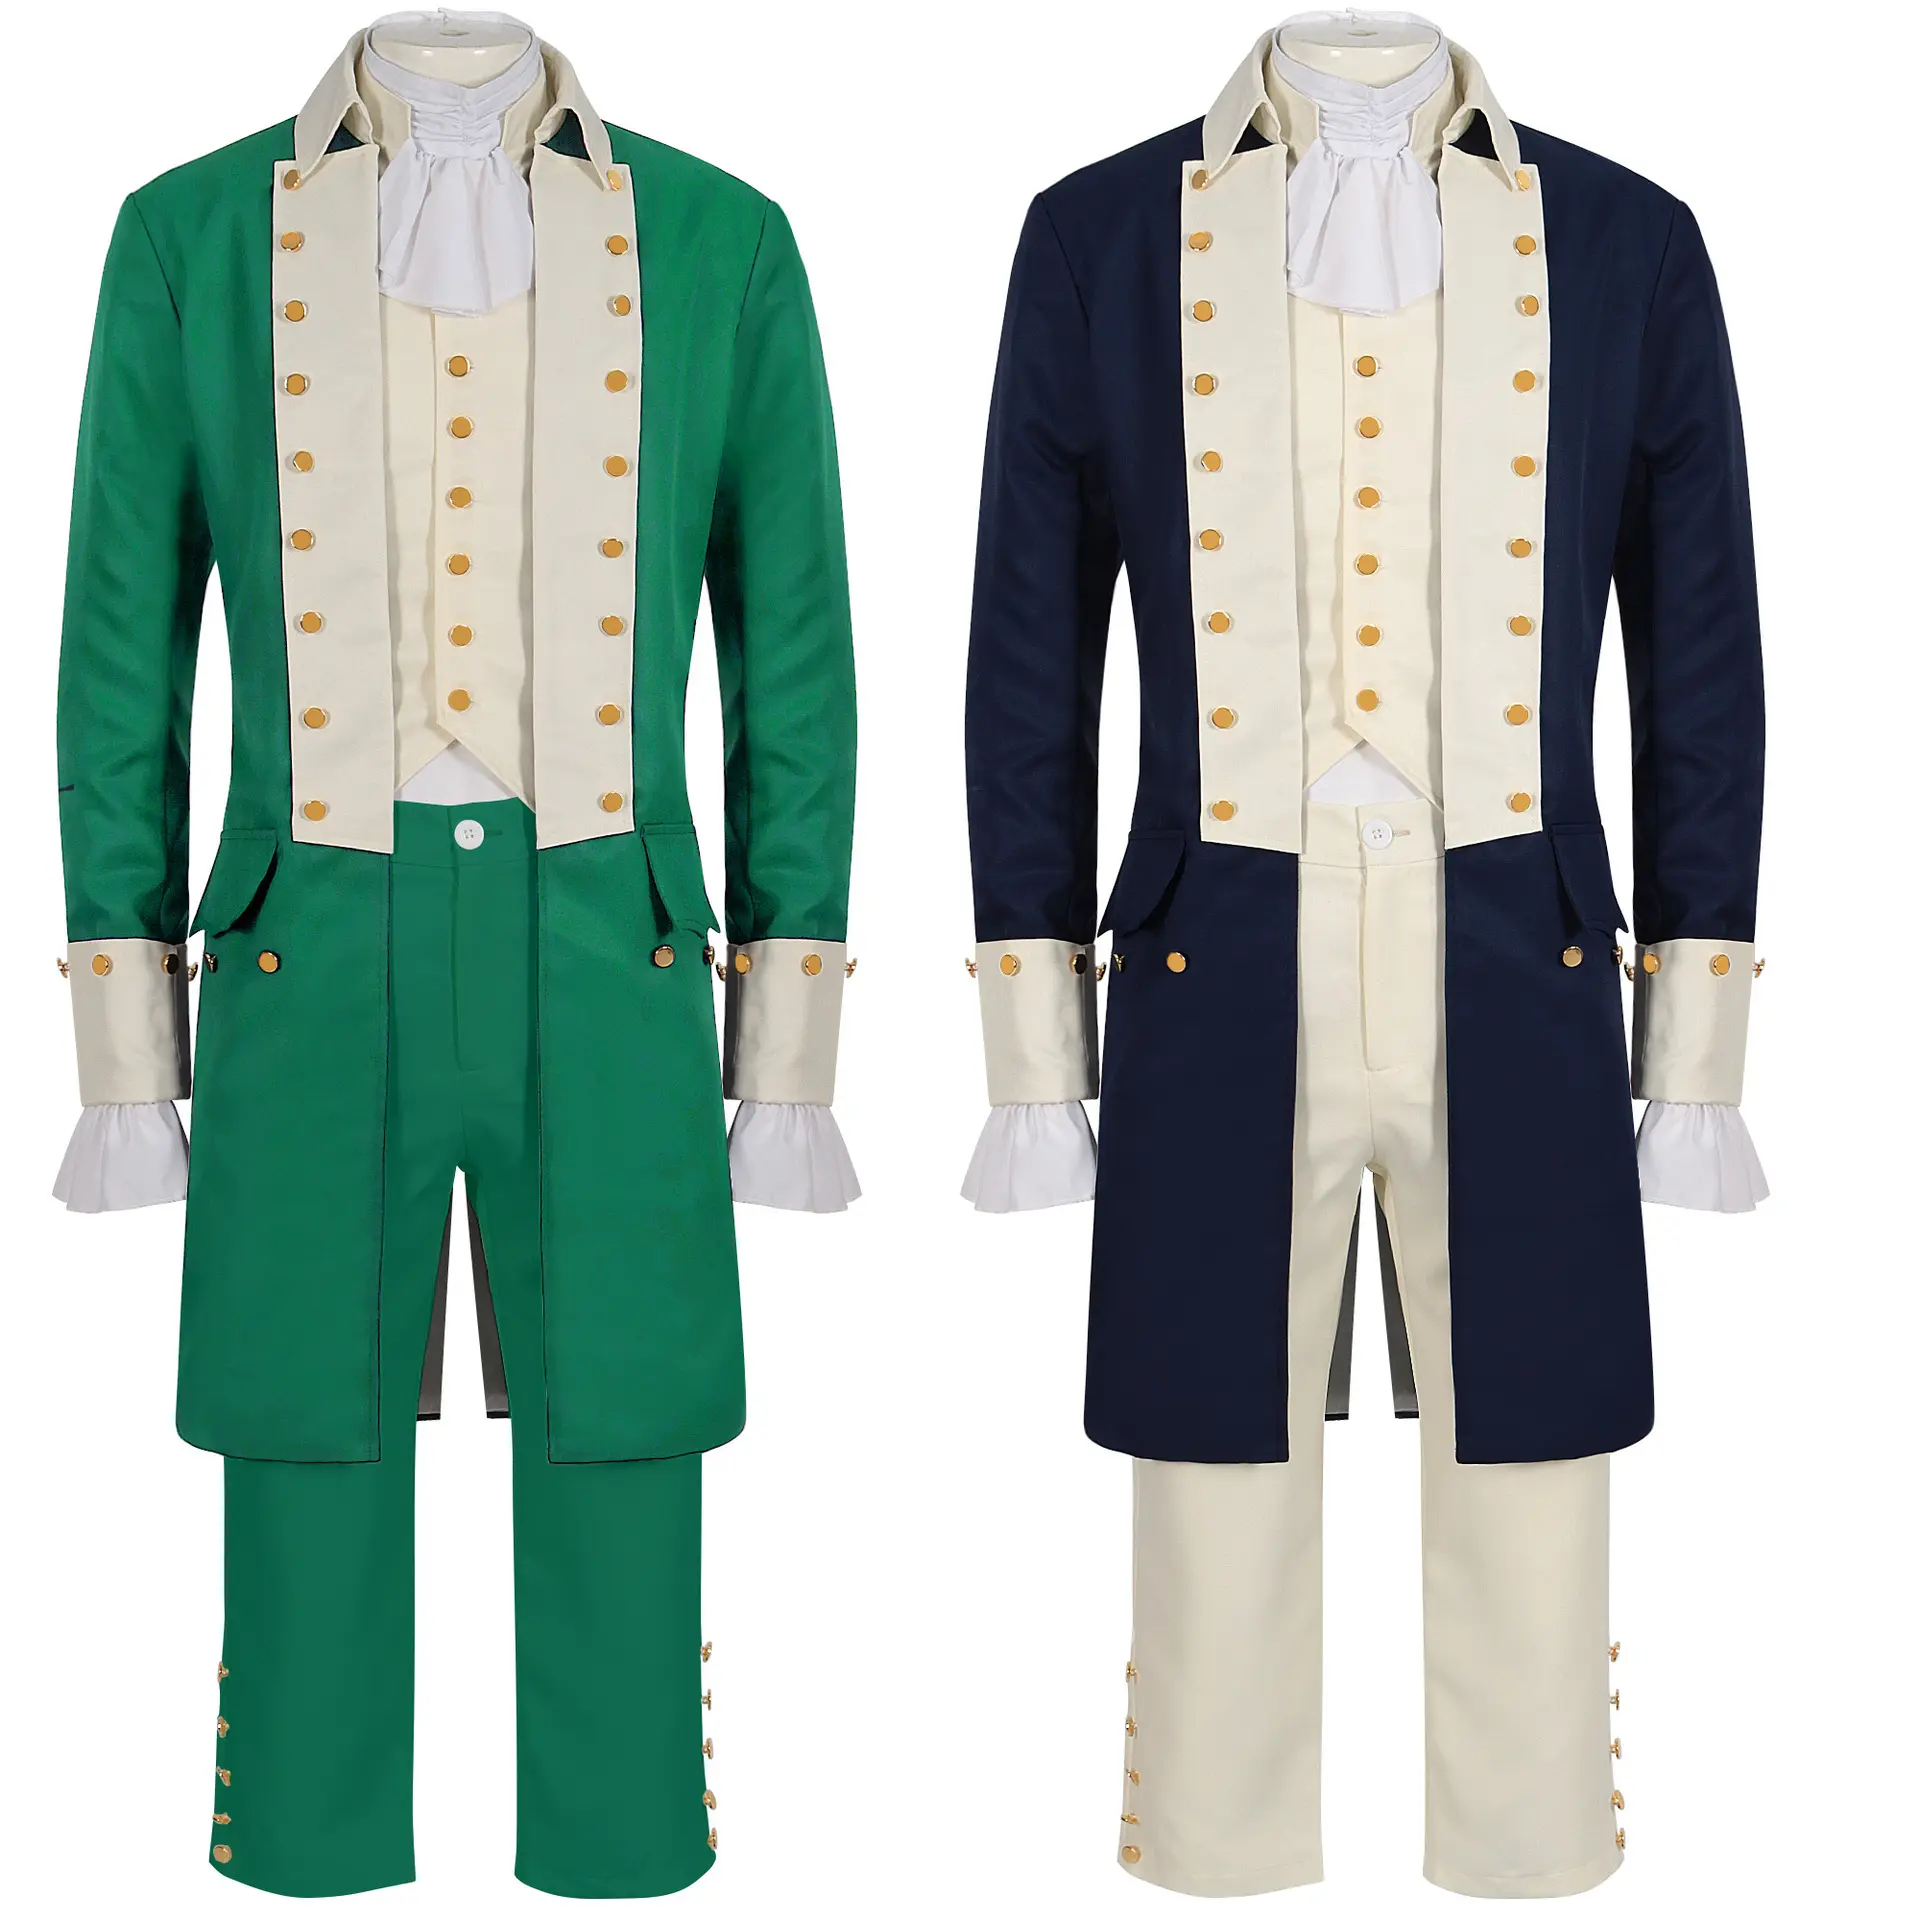 Opernkostüm Herrenkostüm Vintage-Tailcoat formale Uniform Erwachsenenkostüm viktorianisches Kolonial-Frock-Herrenmantel Rock-Anzug